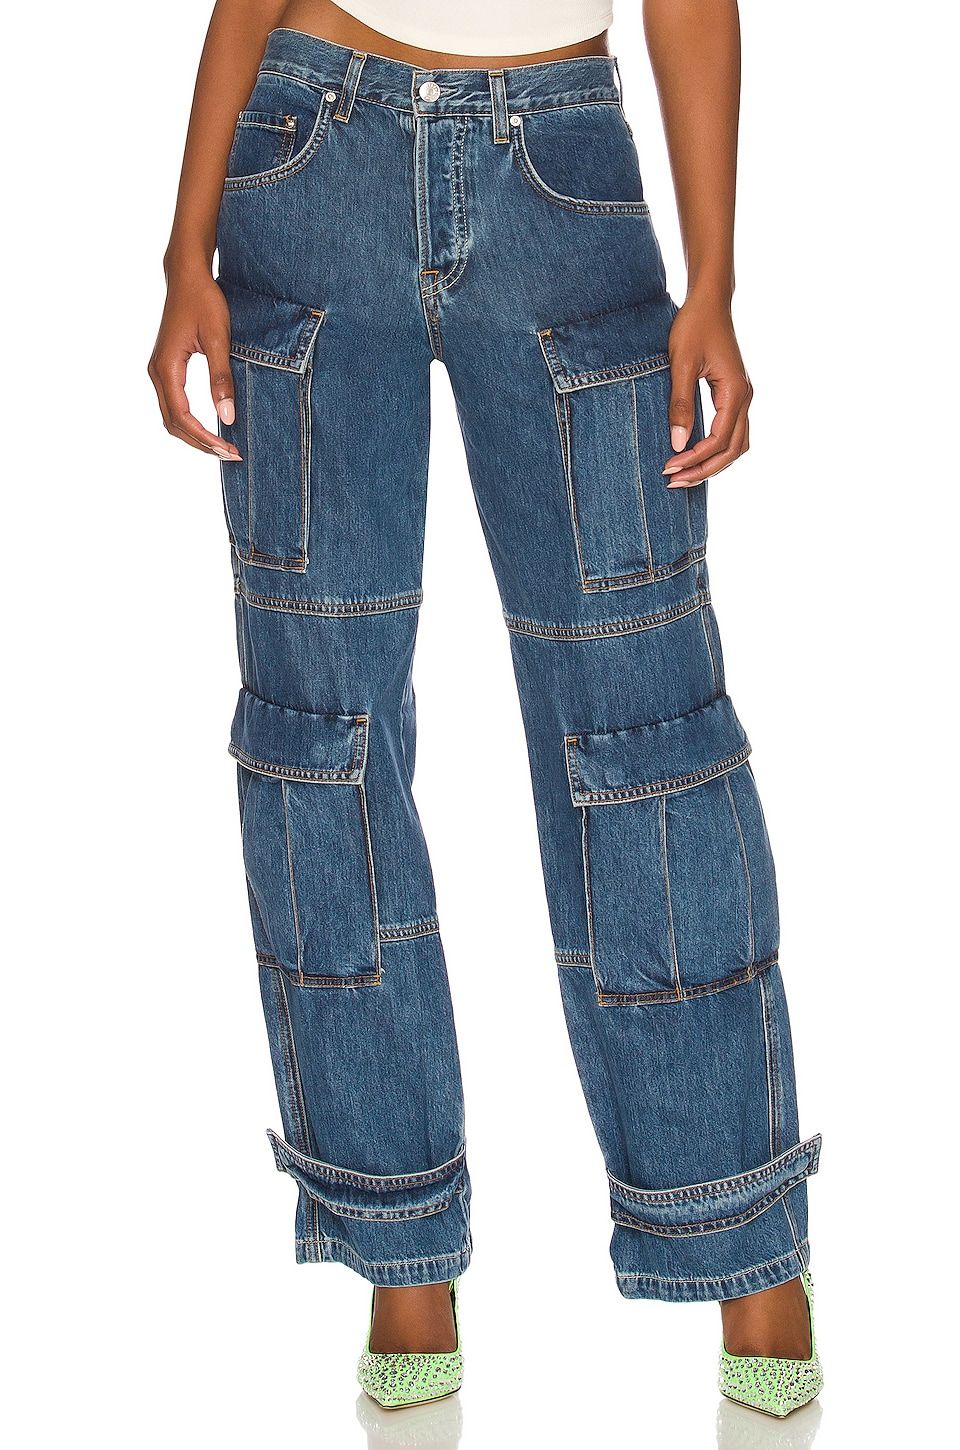 1637 Jeans Type Pants Images Stock Photos  Vectors  Shutterstock